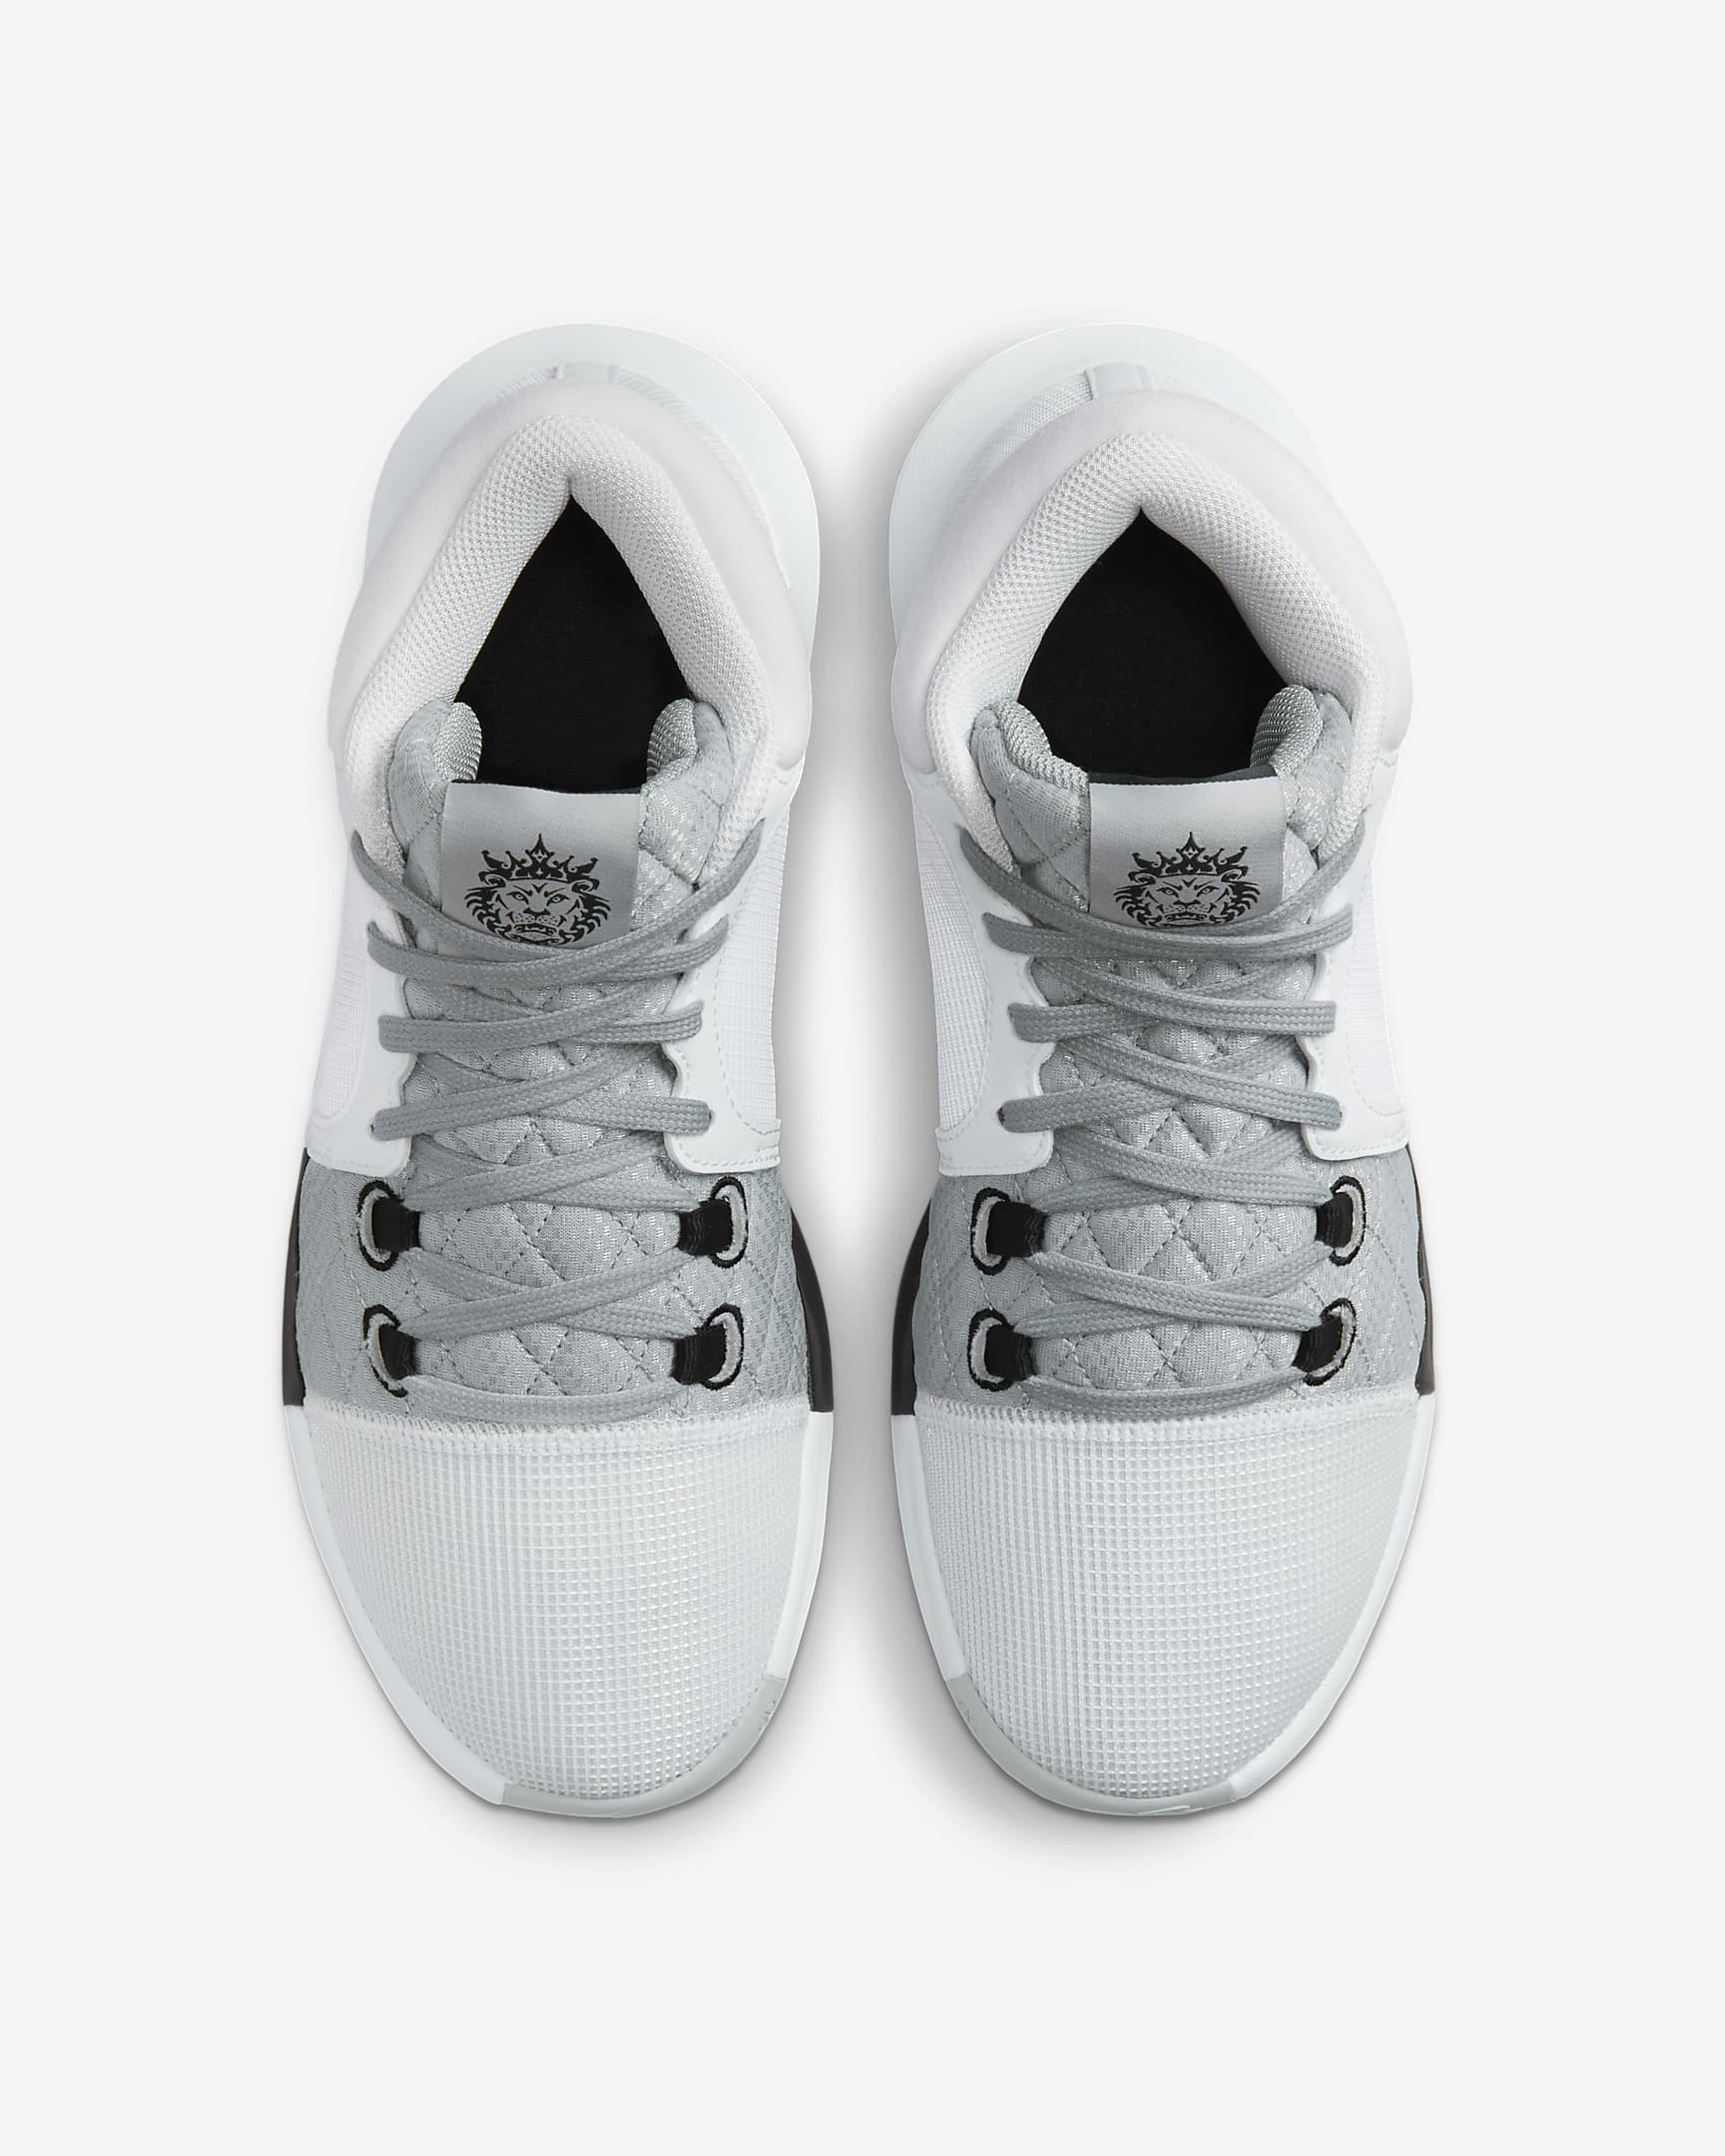 Chaussure de basket LeBron Witness 8 - Blanc/Light Smoke Grey/Noir